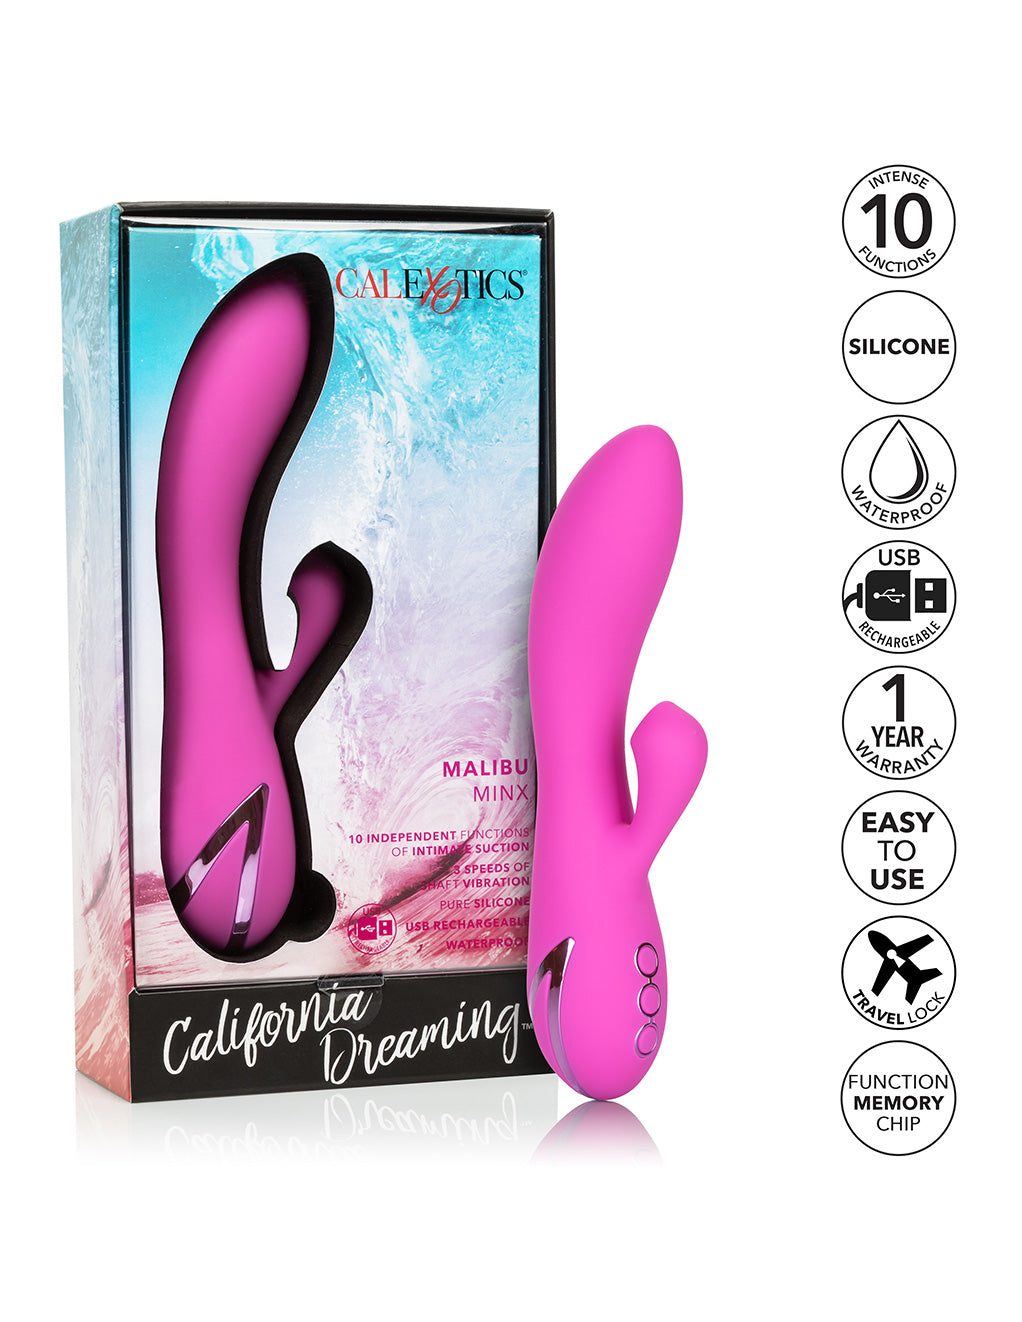 California Dreaming Malibu Minx Dual Stimulation Vibrator- Features